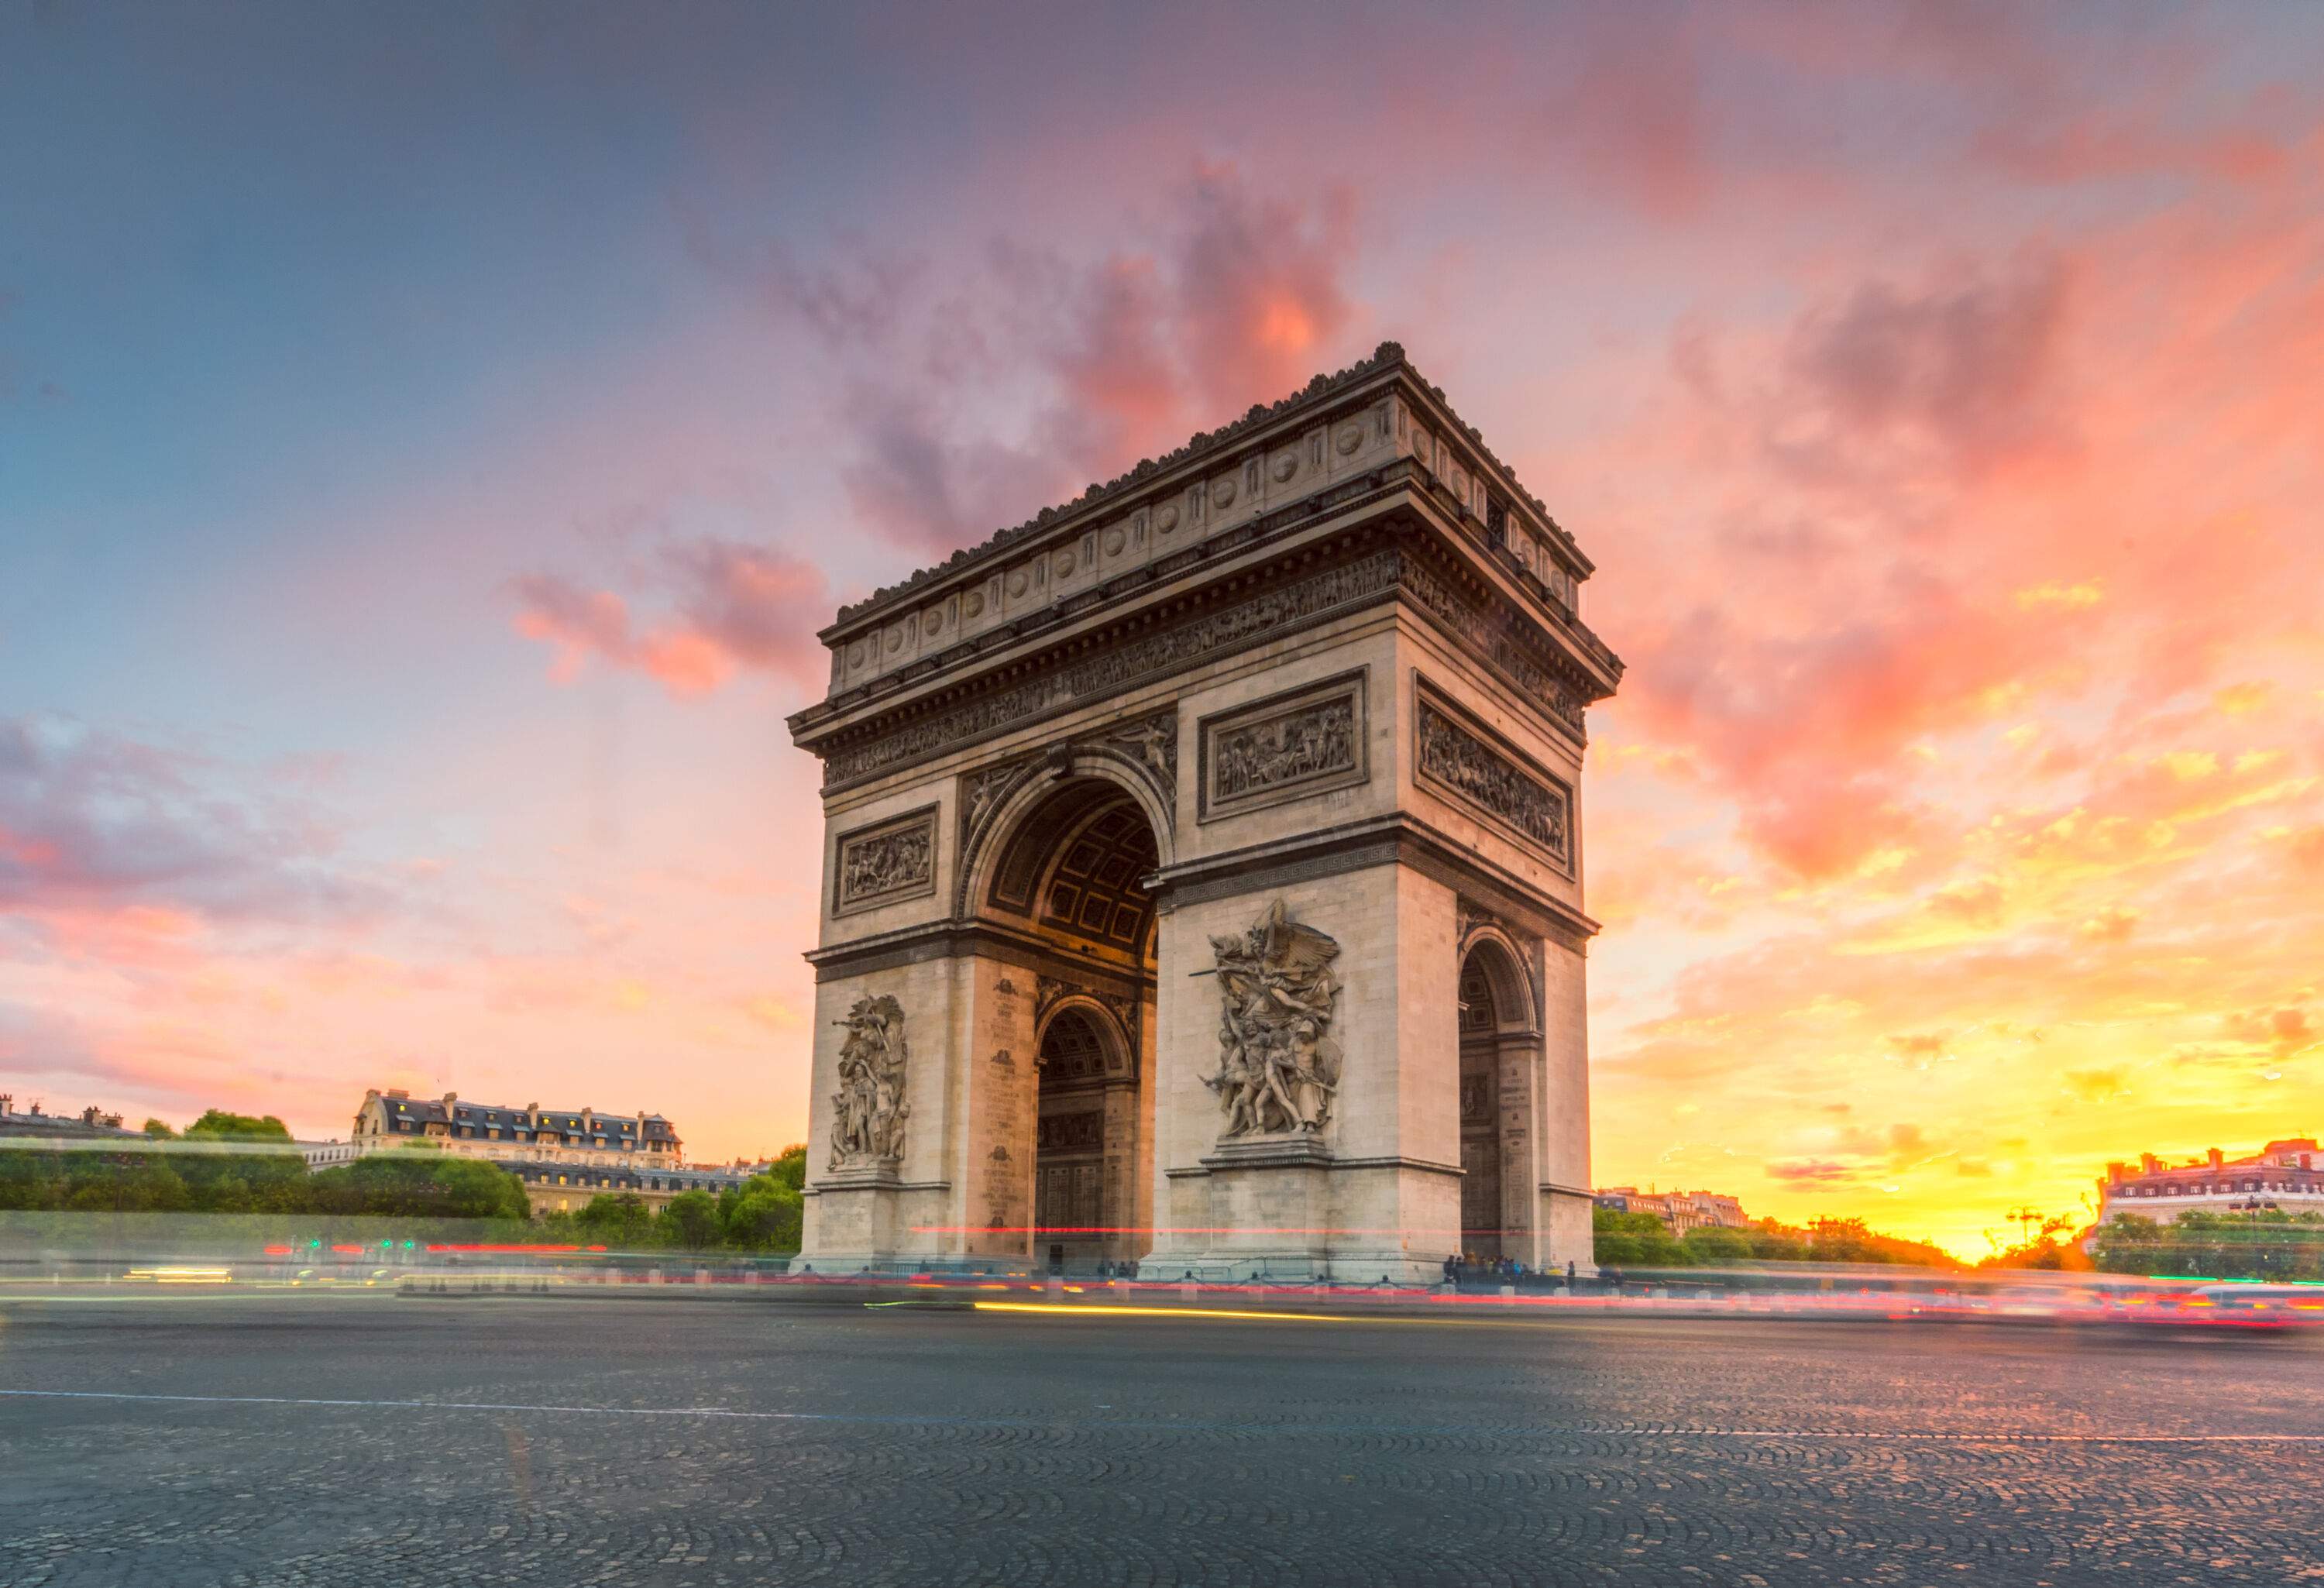 A famous monument called the Arc de Triomphe in Paris, France against the twilight sky.